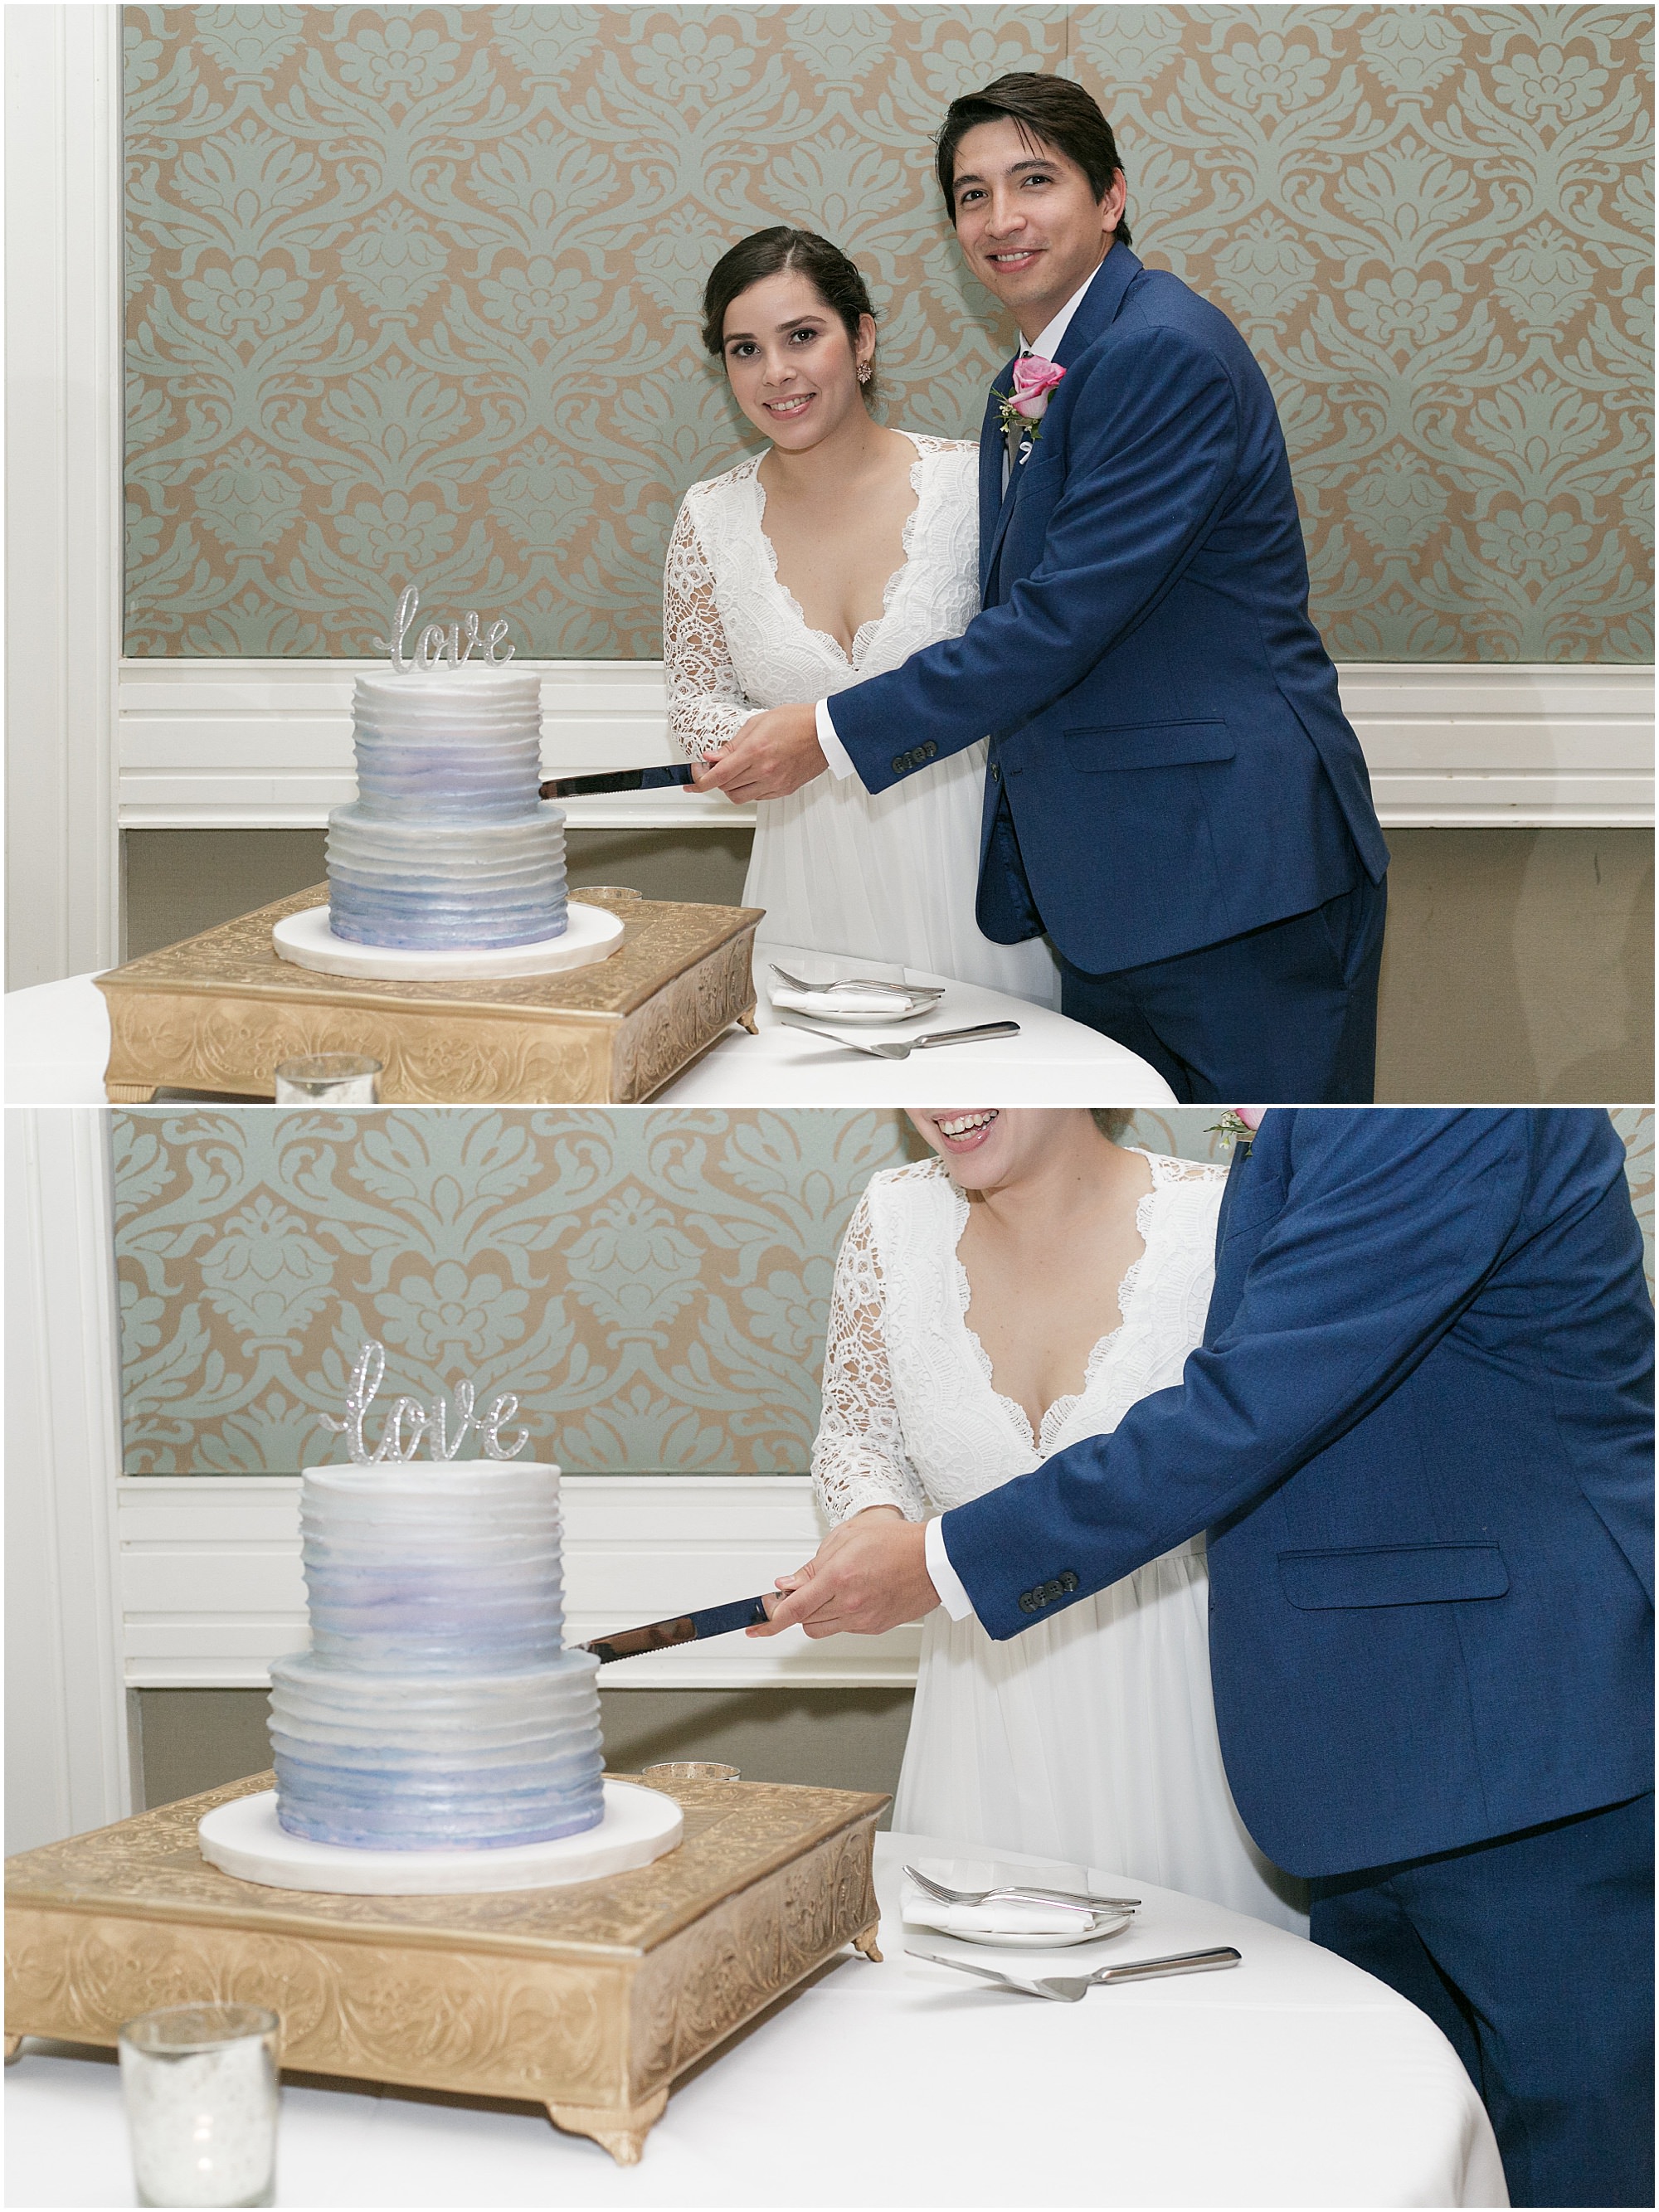 Couple slice into their wedding cake